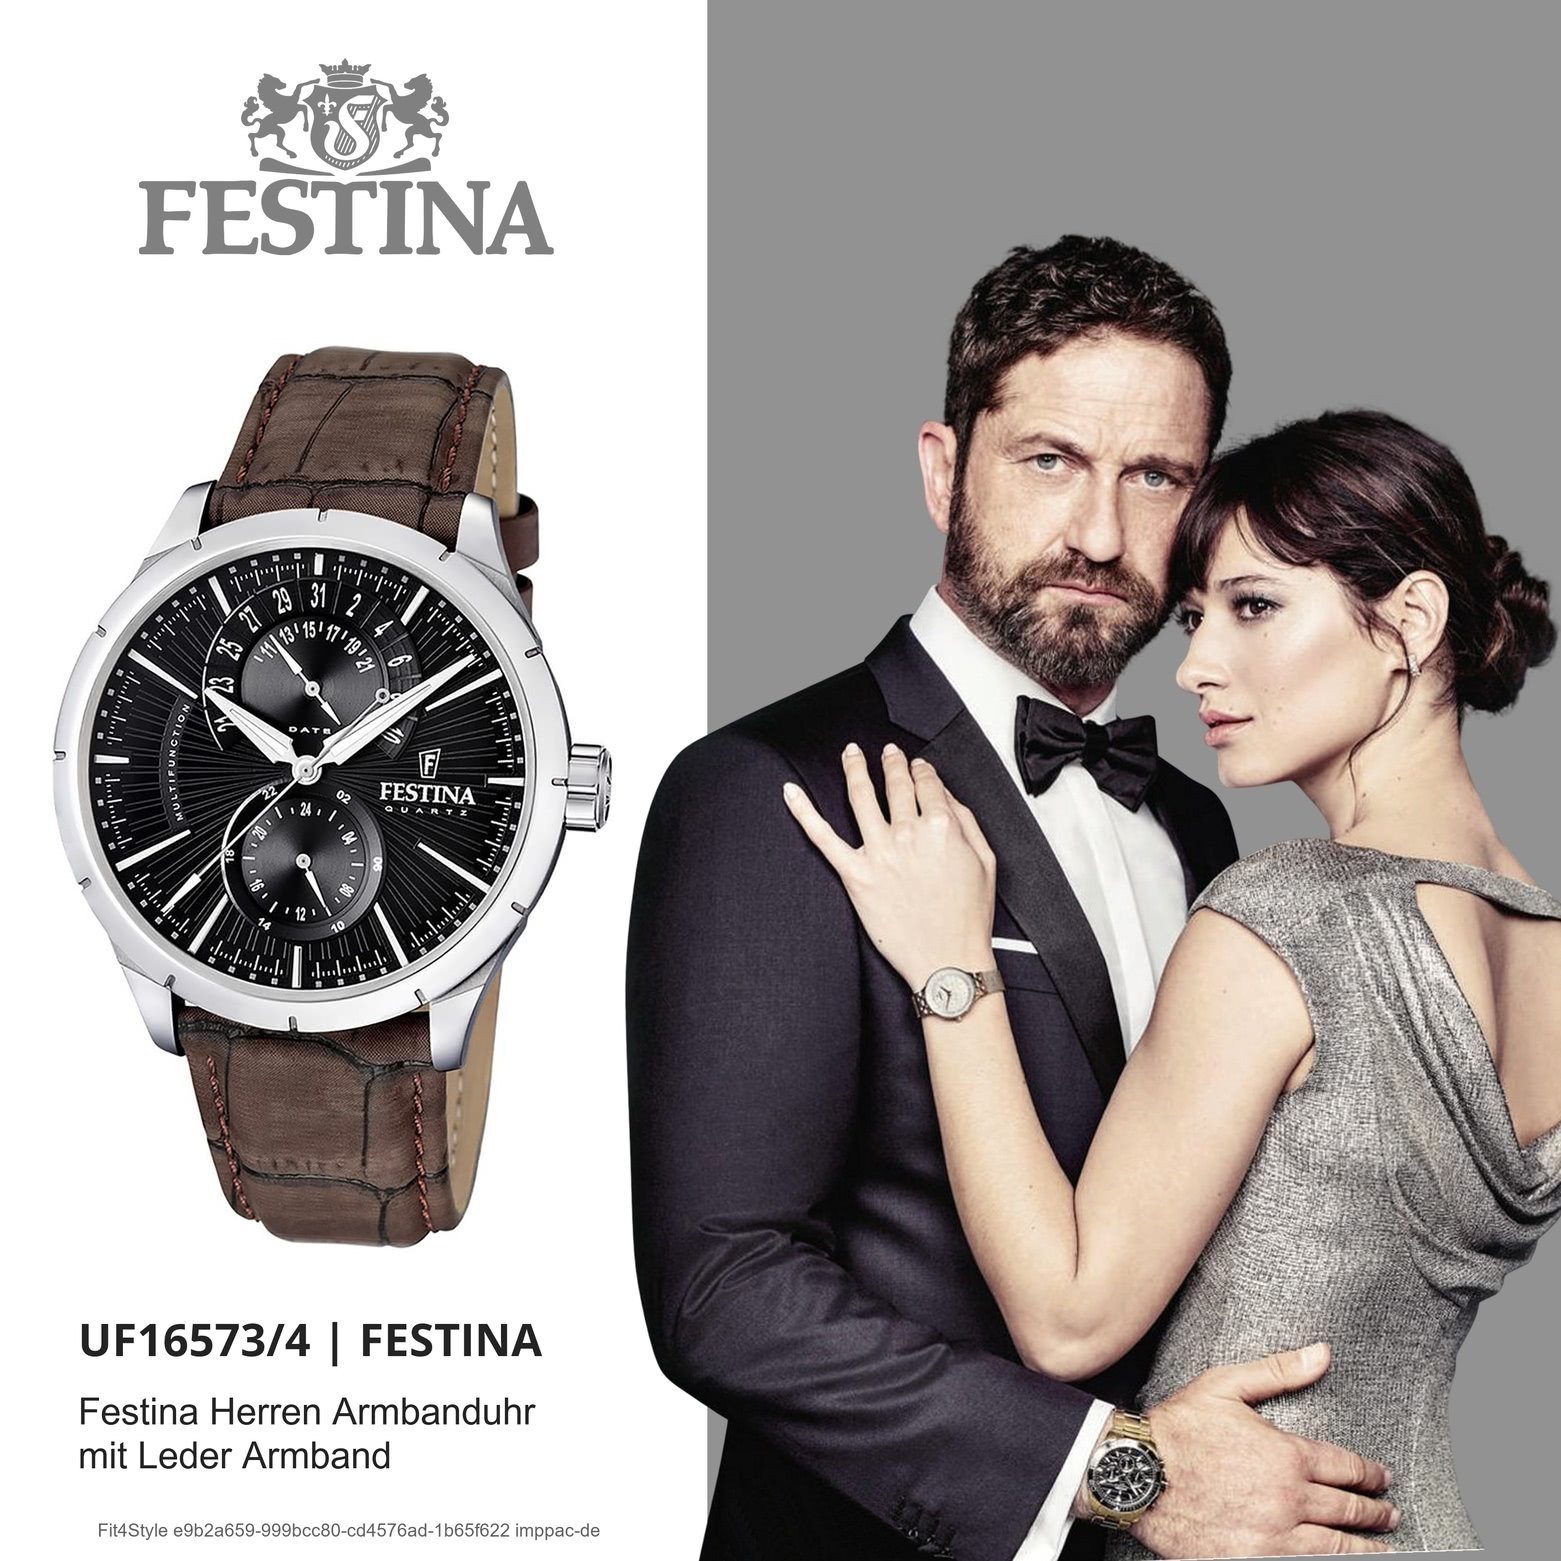 F16573/X, Festina Herren braun-schwarz schwarz UF16573/X rund, Multifunktionsuhr Festina Herren Armbanduhr Uhr Lederarmband Elegant